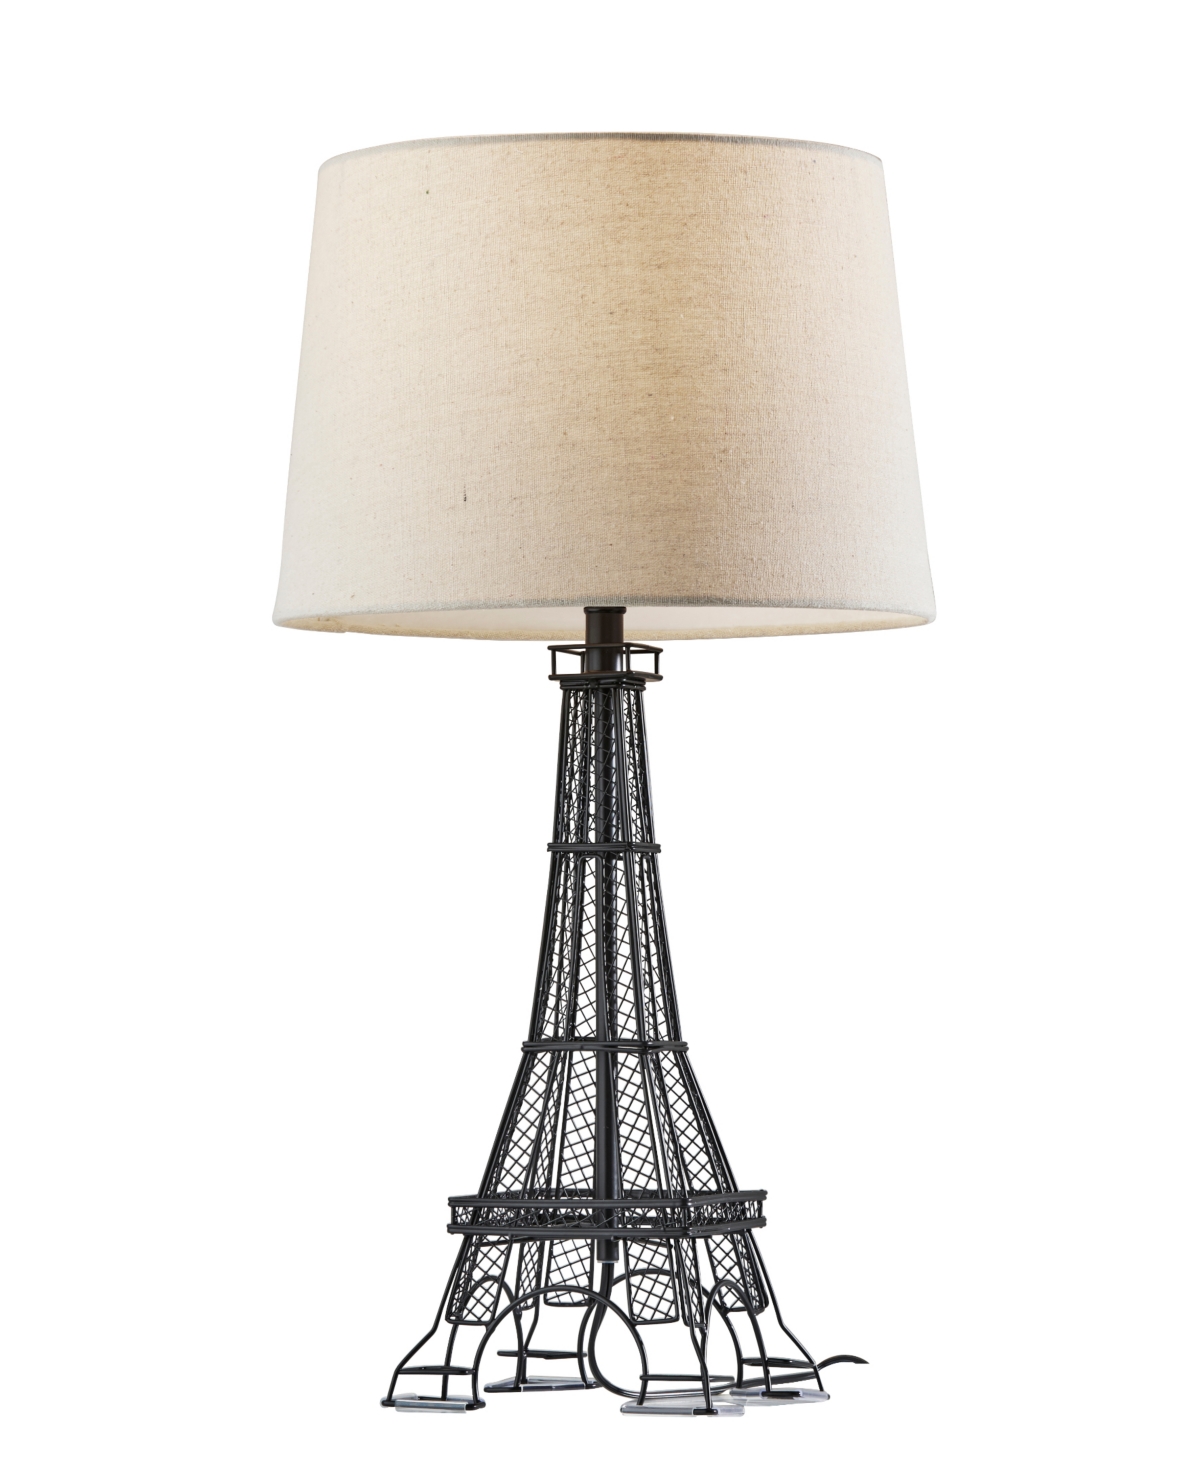 12272054 Adesso Eiffel Tower Table Lamp sku 12272054